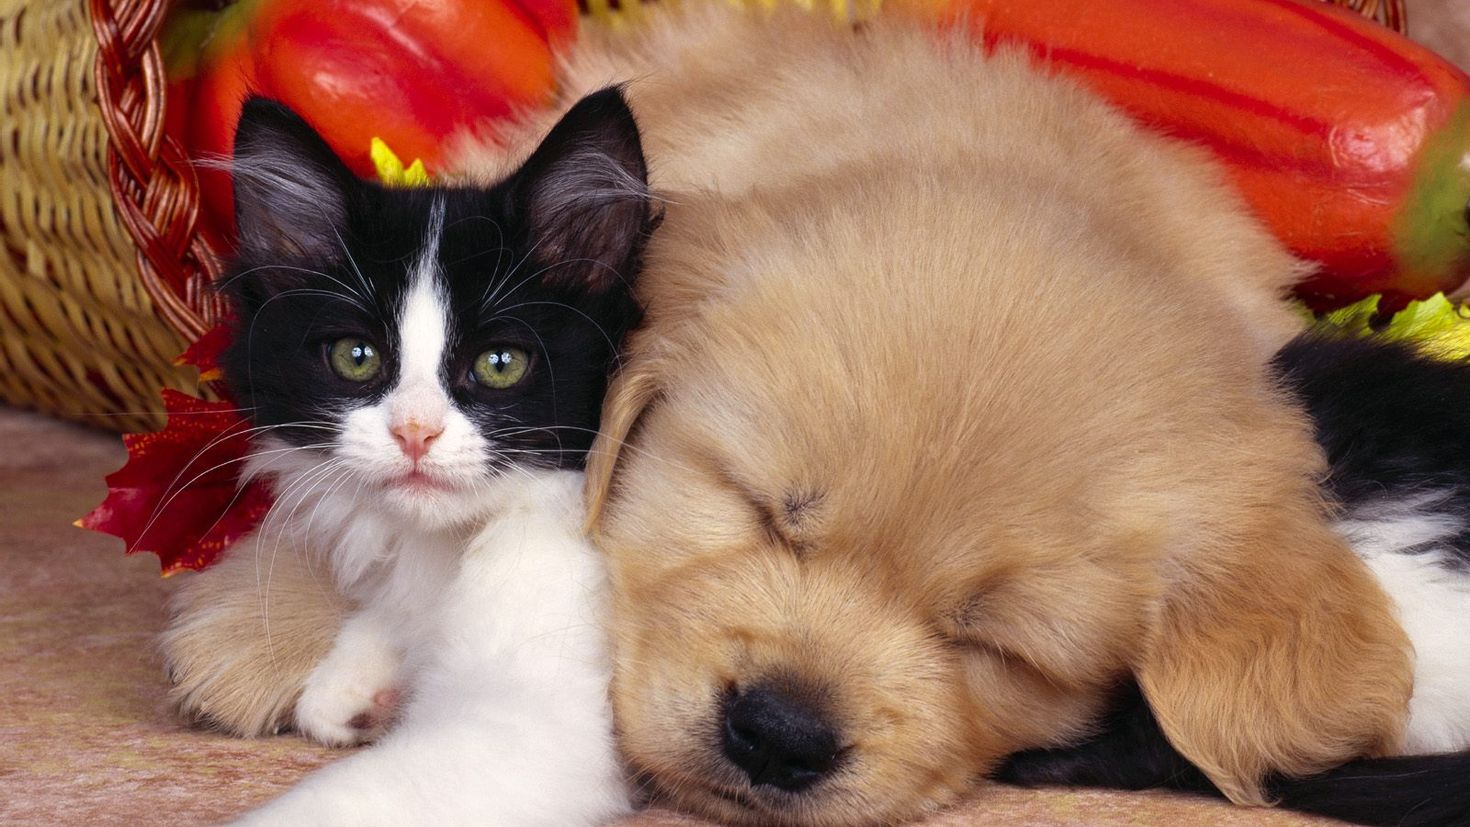 Кошки и т д. Щенок и котенок. Милые собачки и кошечки. Милые кошки и собаки. Щенки и кошечки милые.